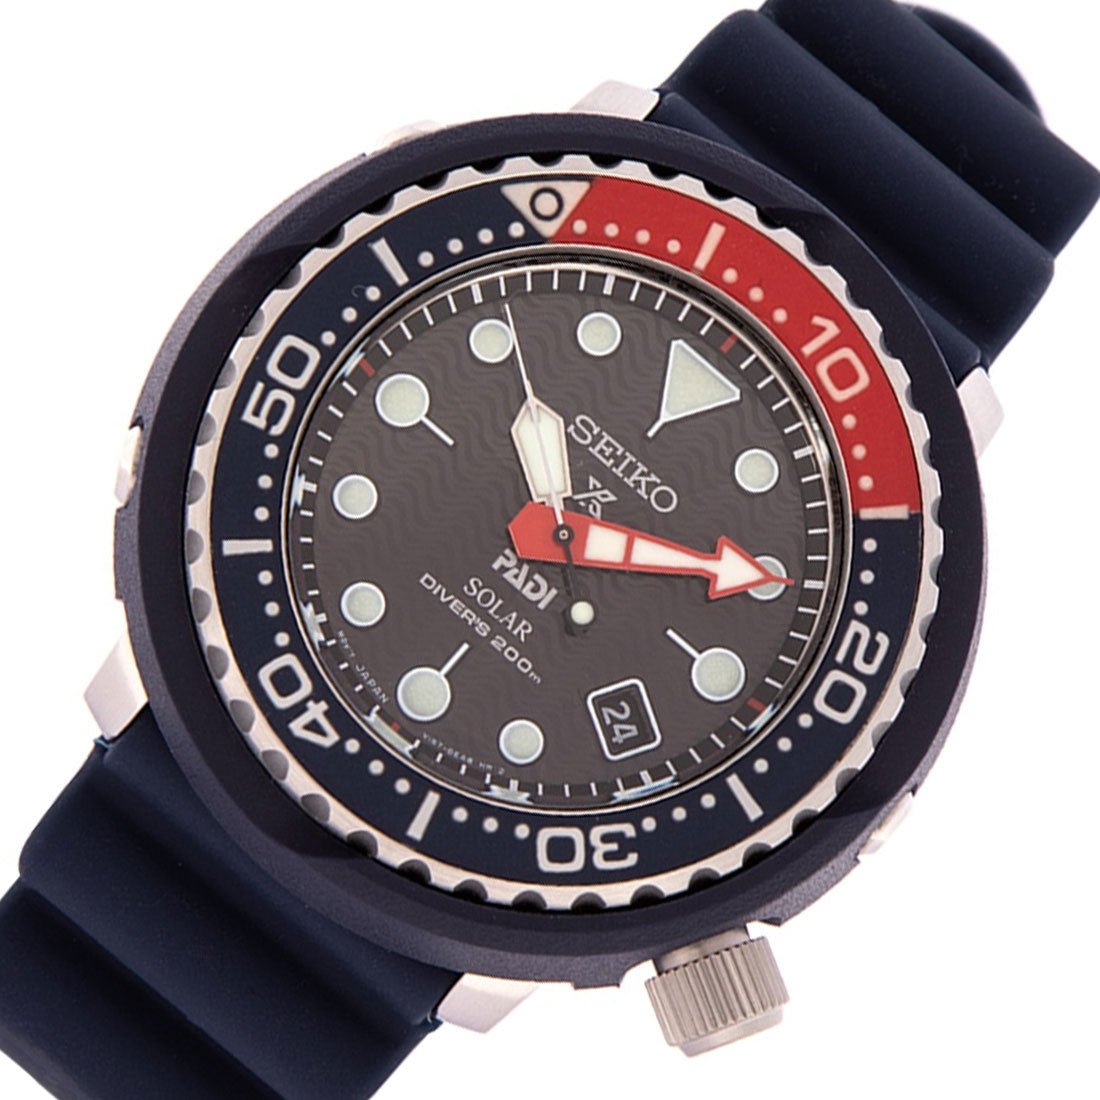 Seiko Prospex Padi Divers Black Dial Watch SNE499P SNE499 SNE499P1 -Seiko